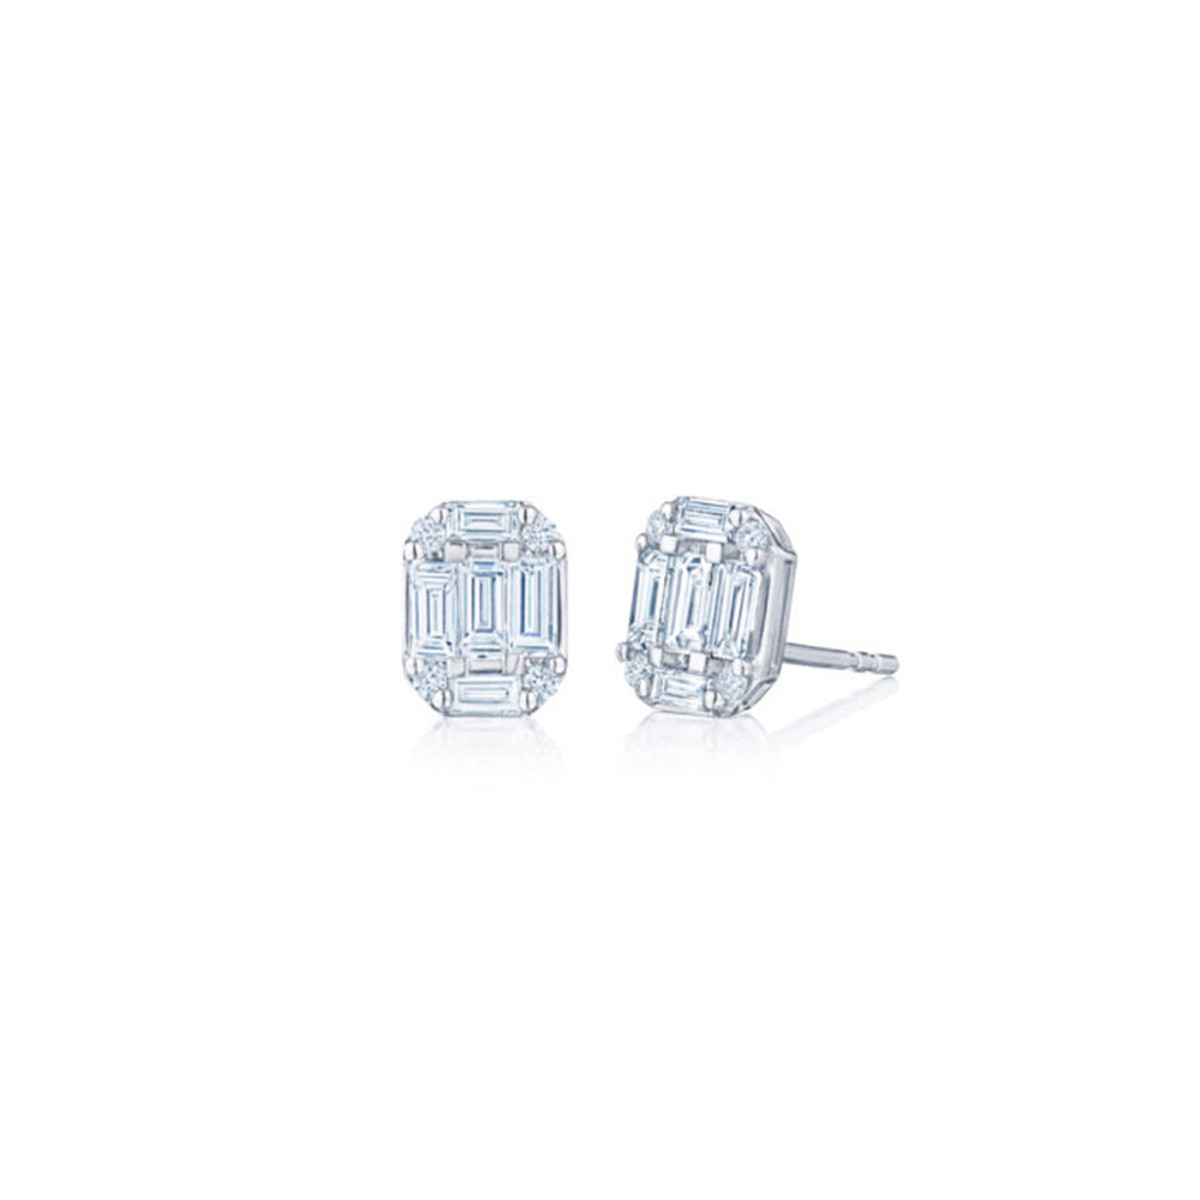 Kwiat 18K White Gold Sunburst Emerald Cut Diamond Stud Earrings-51838 Product Image